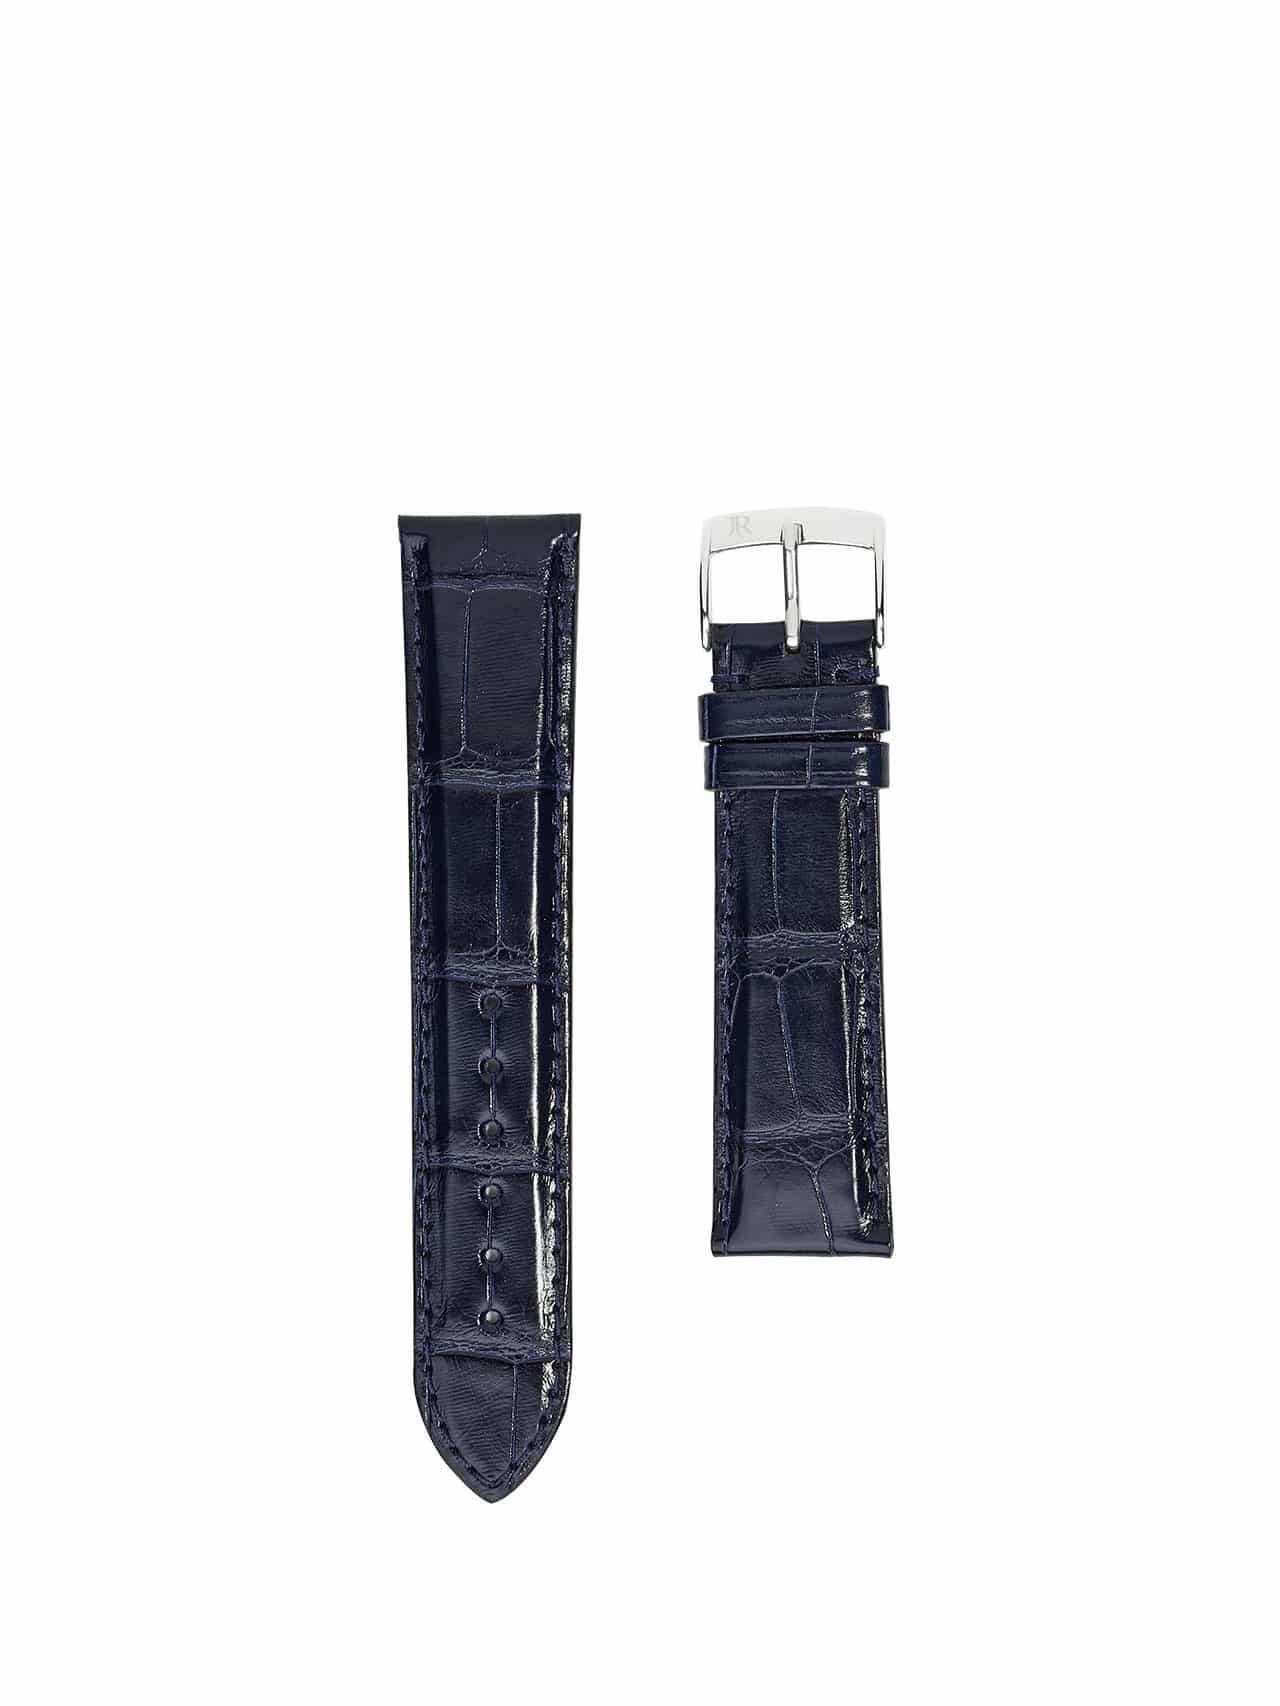 jean rousseau watch straps leather crocodile black